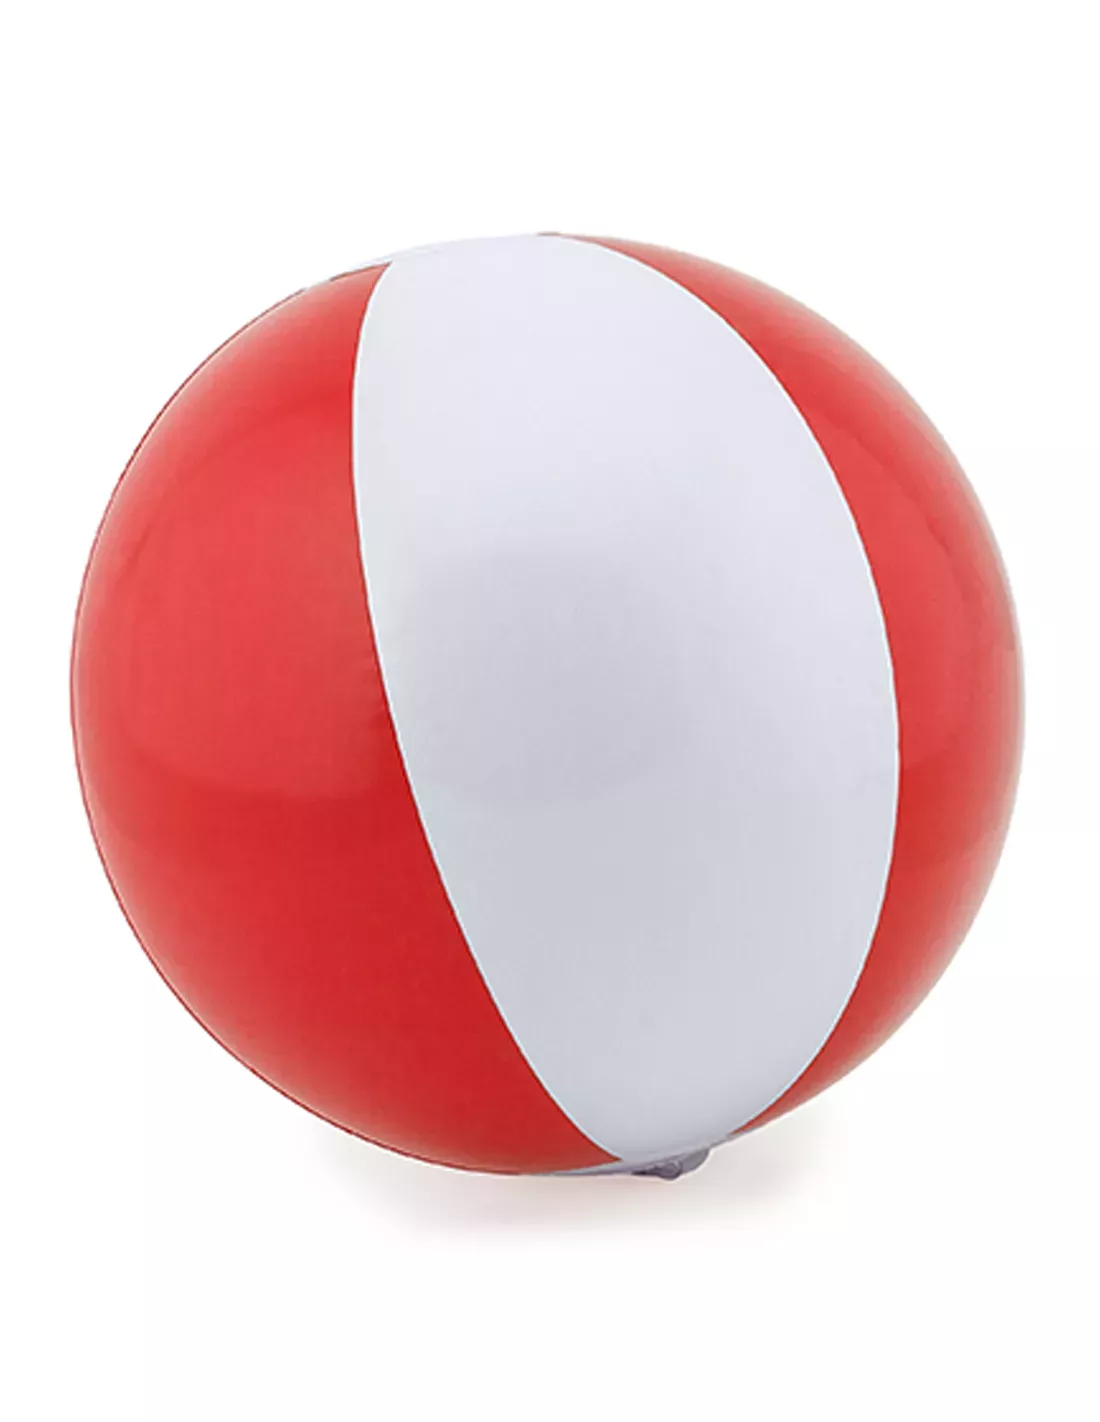 Balón inflable SAONA